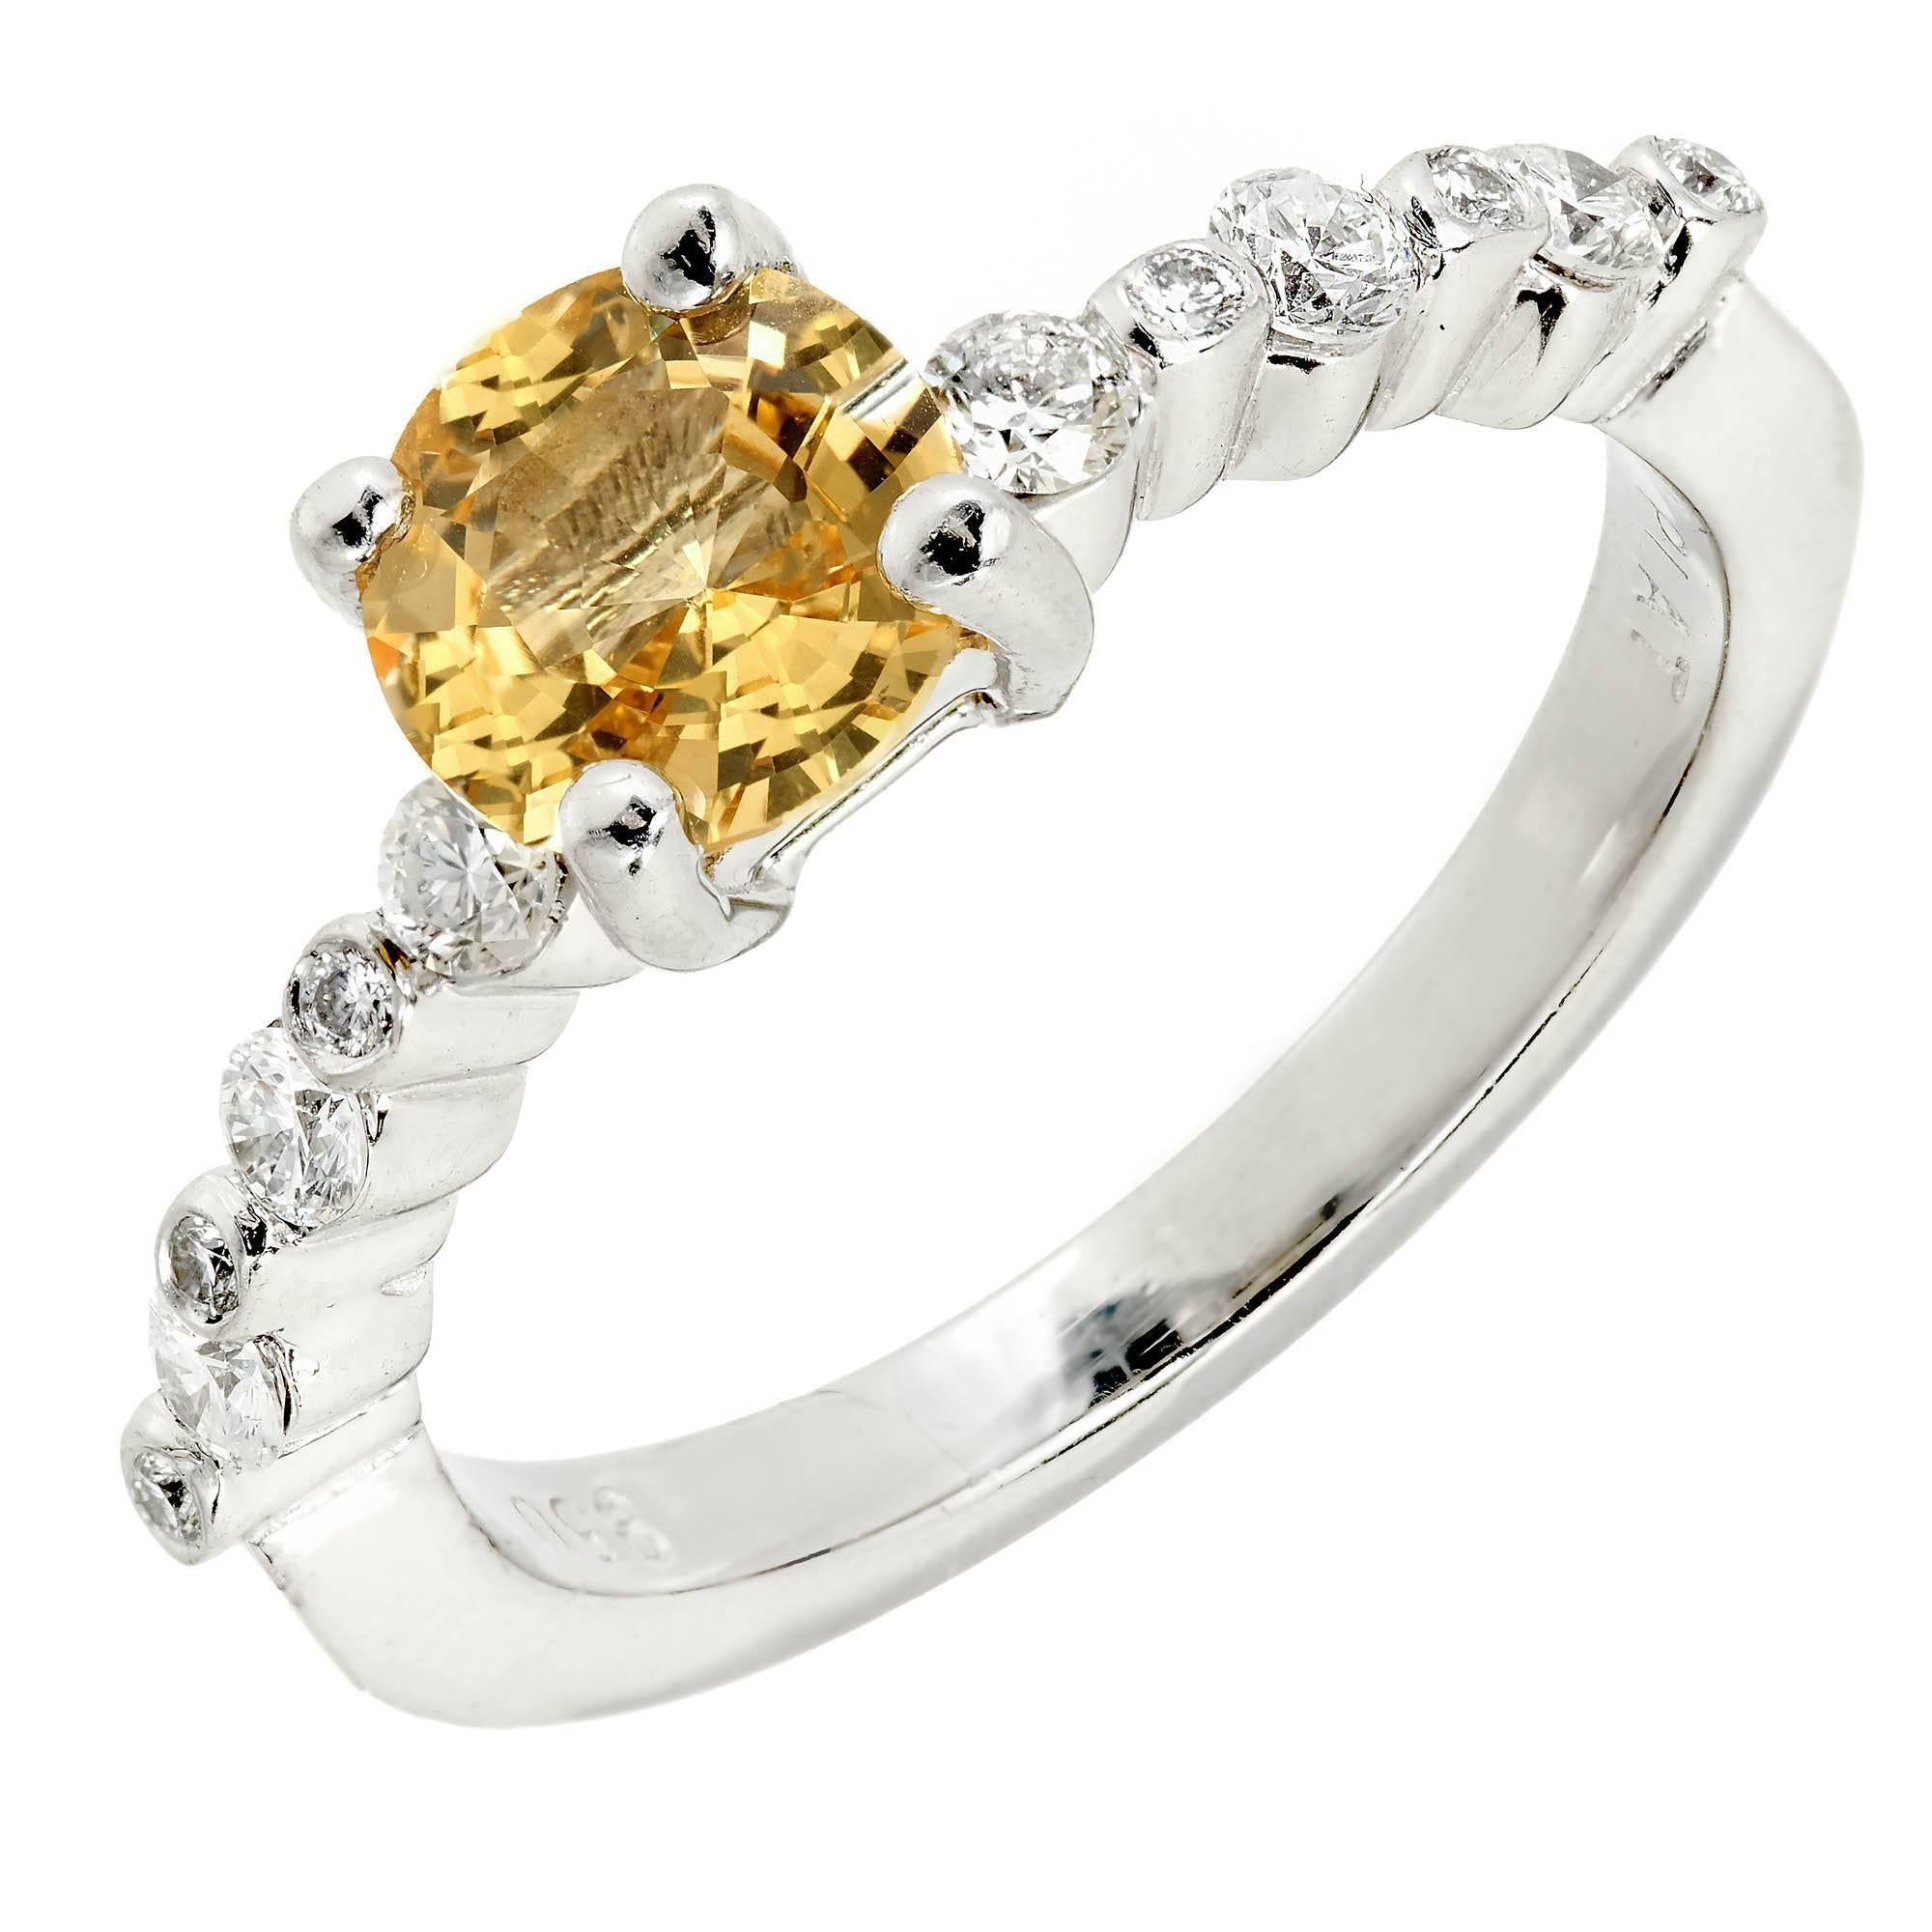 1.05 Carat Natural Fancy Yellow Sapphire Diamond Platinum Engagement Ring